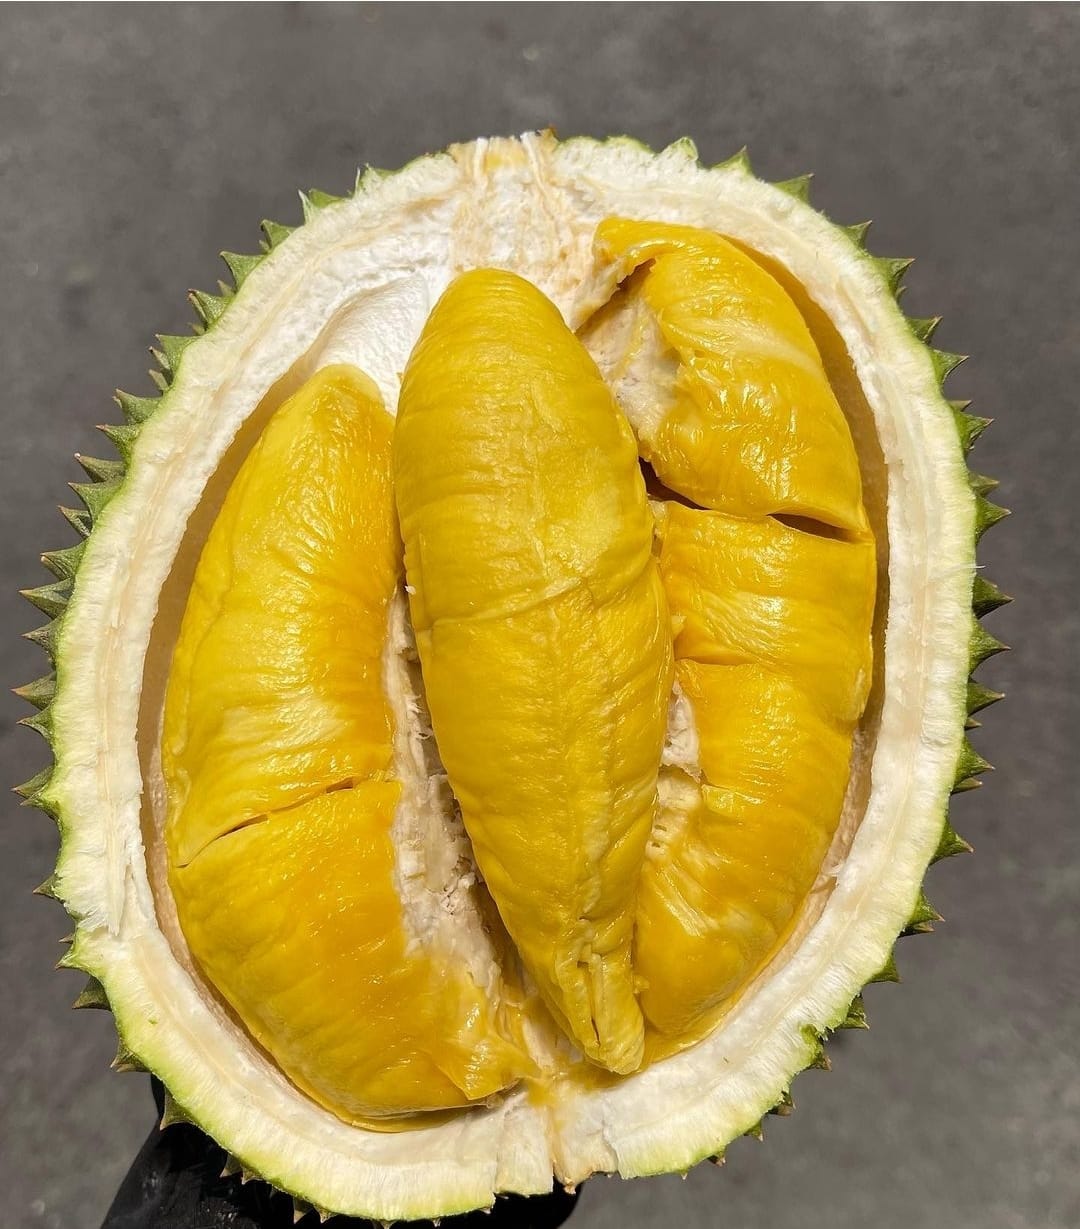 Musim Durian! Waspada Efek Sampingnya, Simak Disini